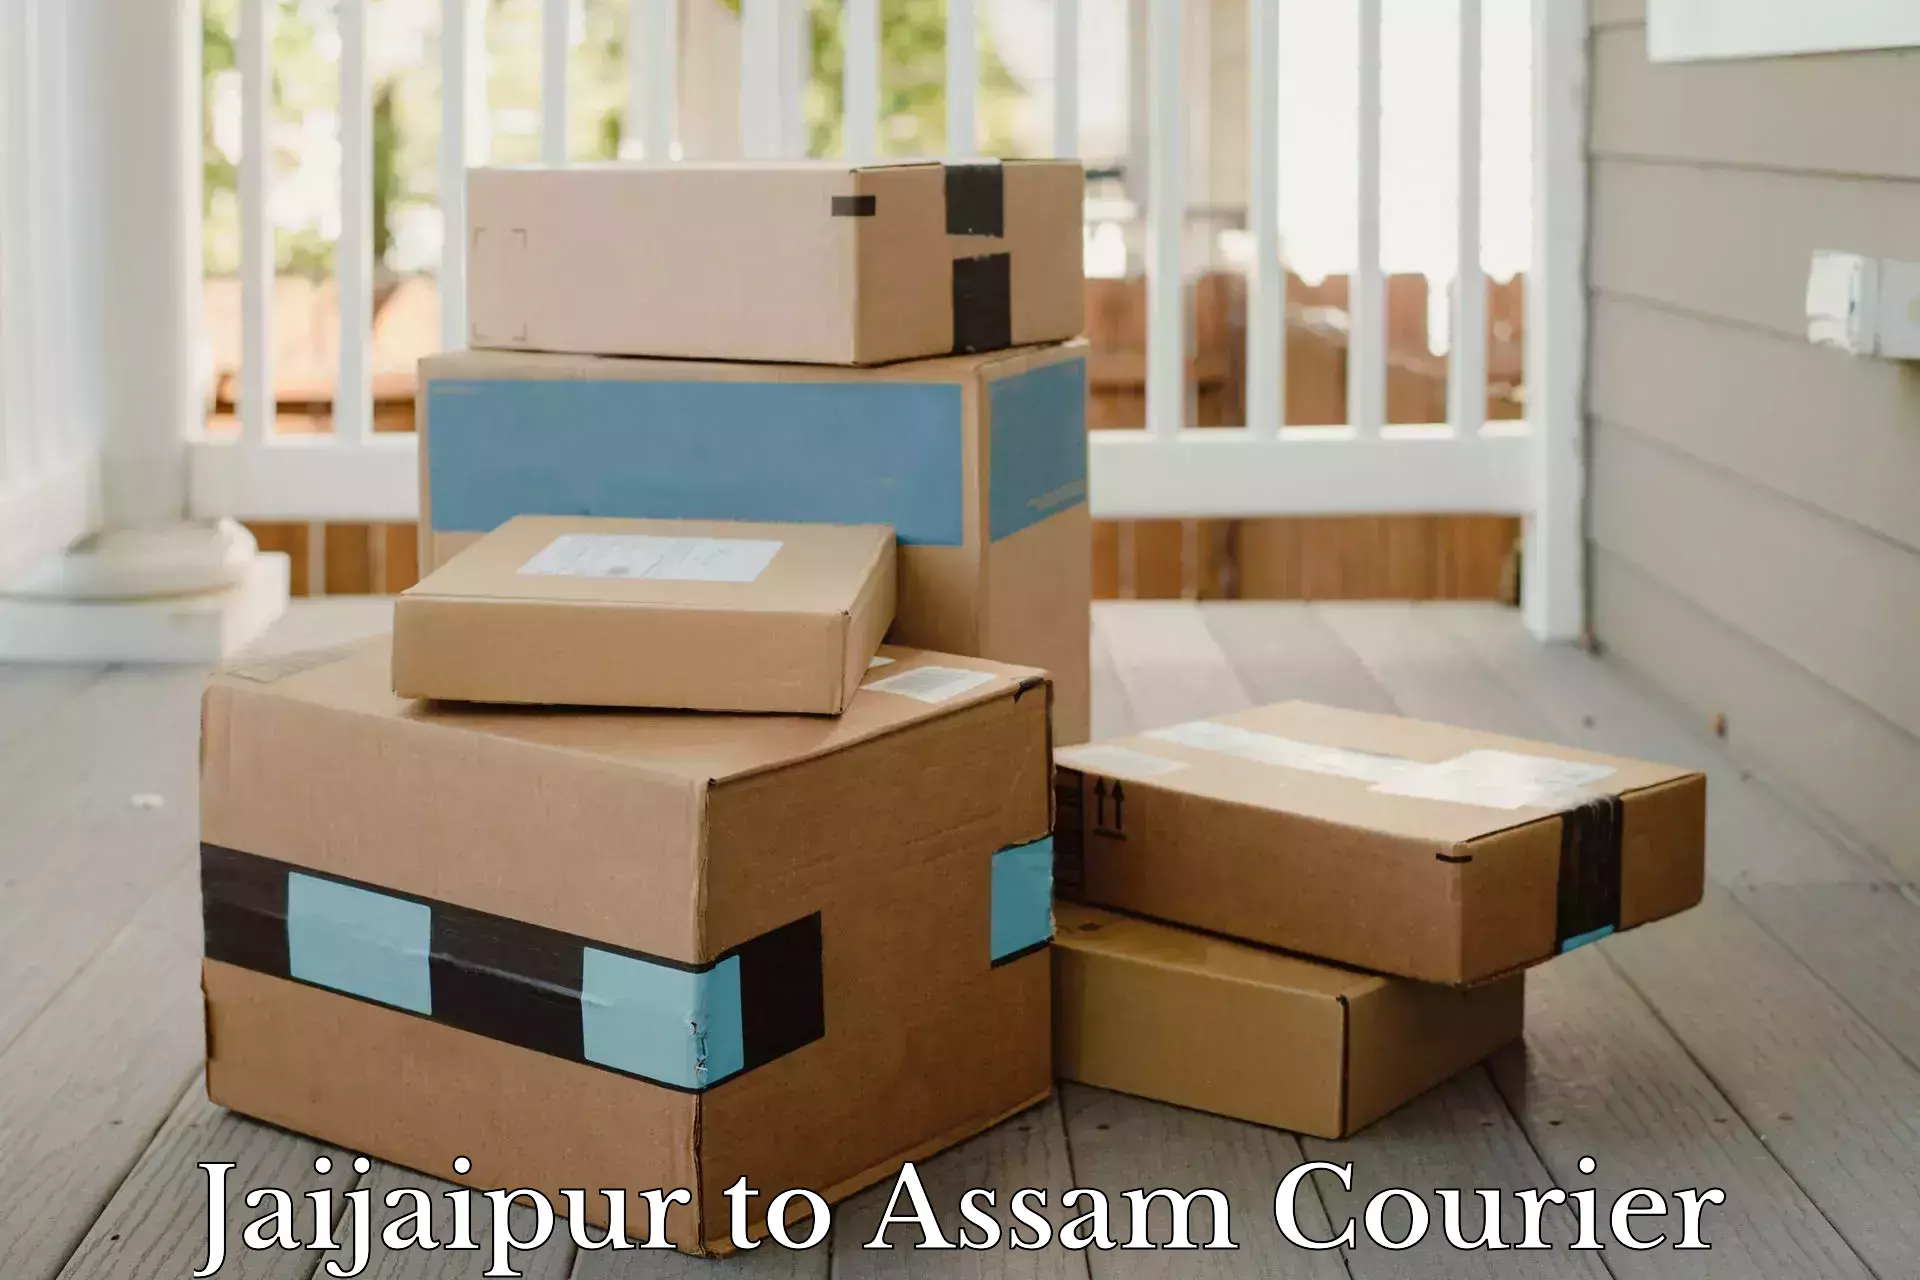 Scheduled delivery Jaijaipur to Kampur